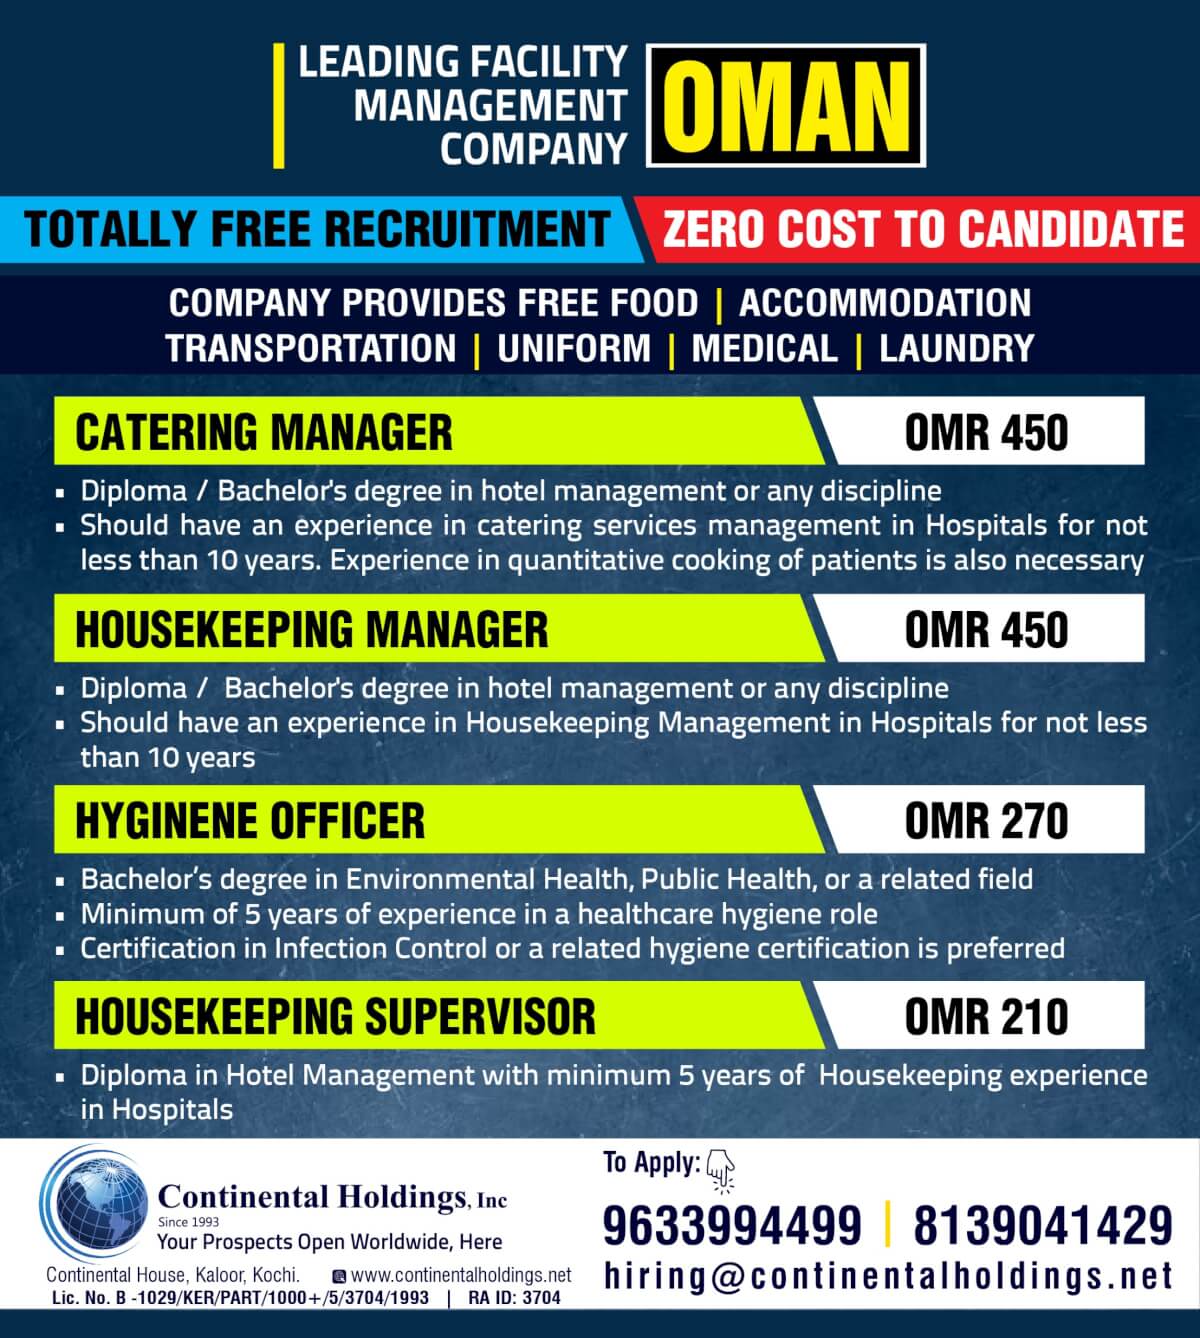 Hiring for Oman - Free Recruitment